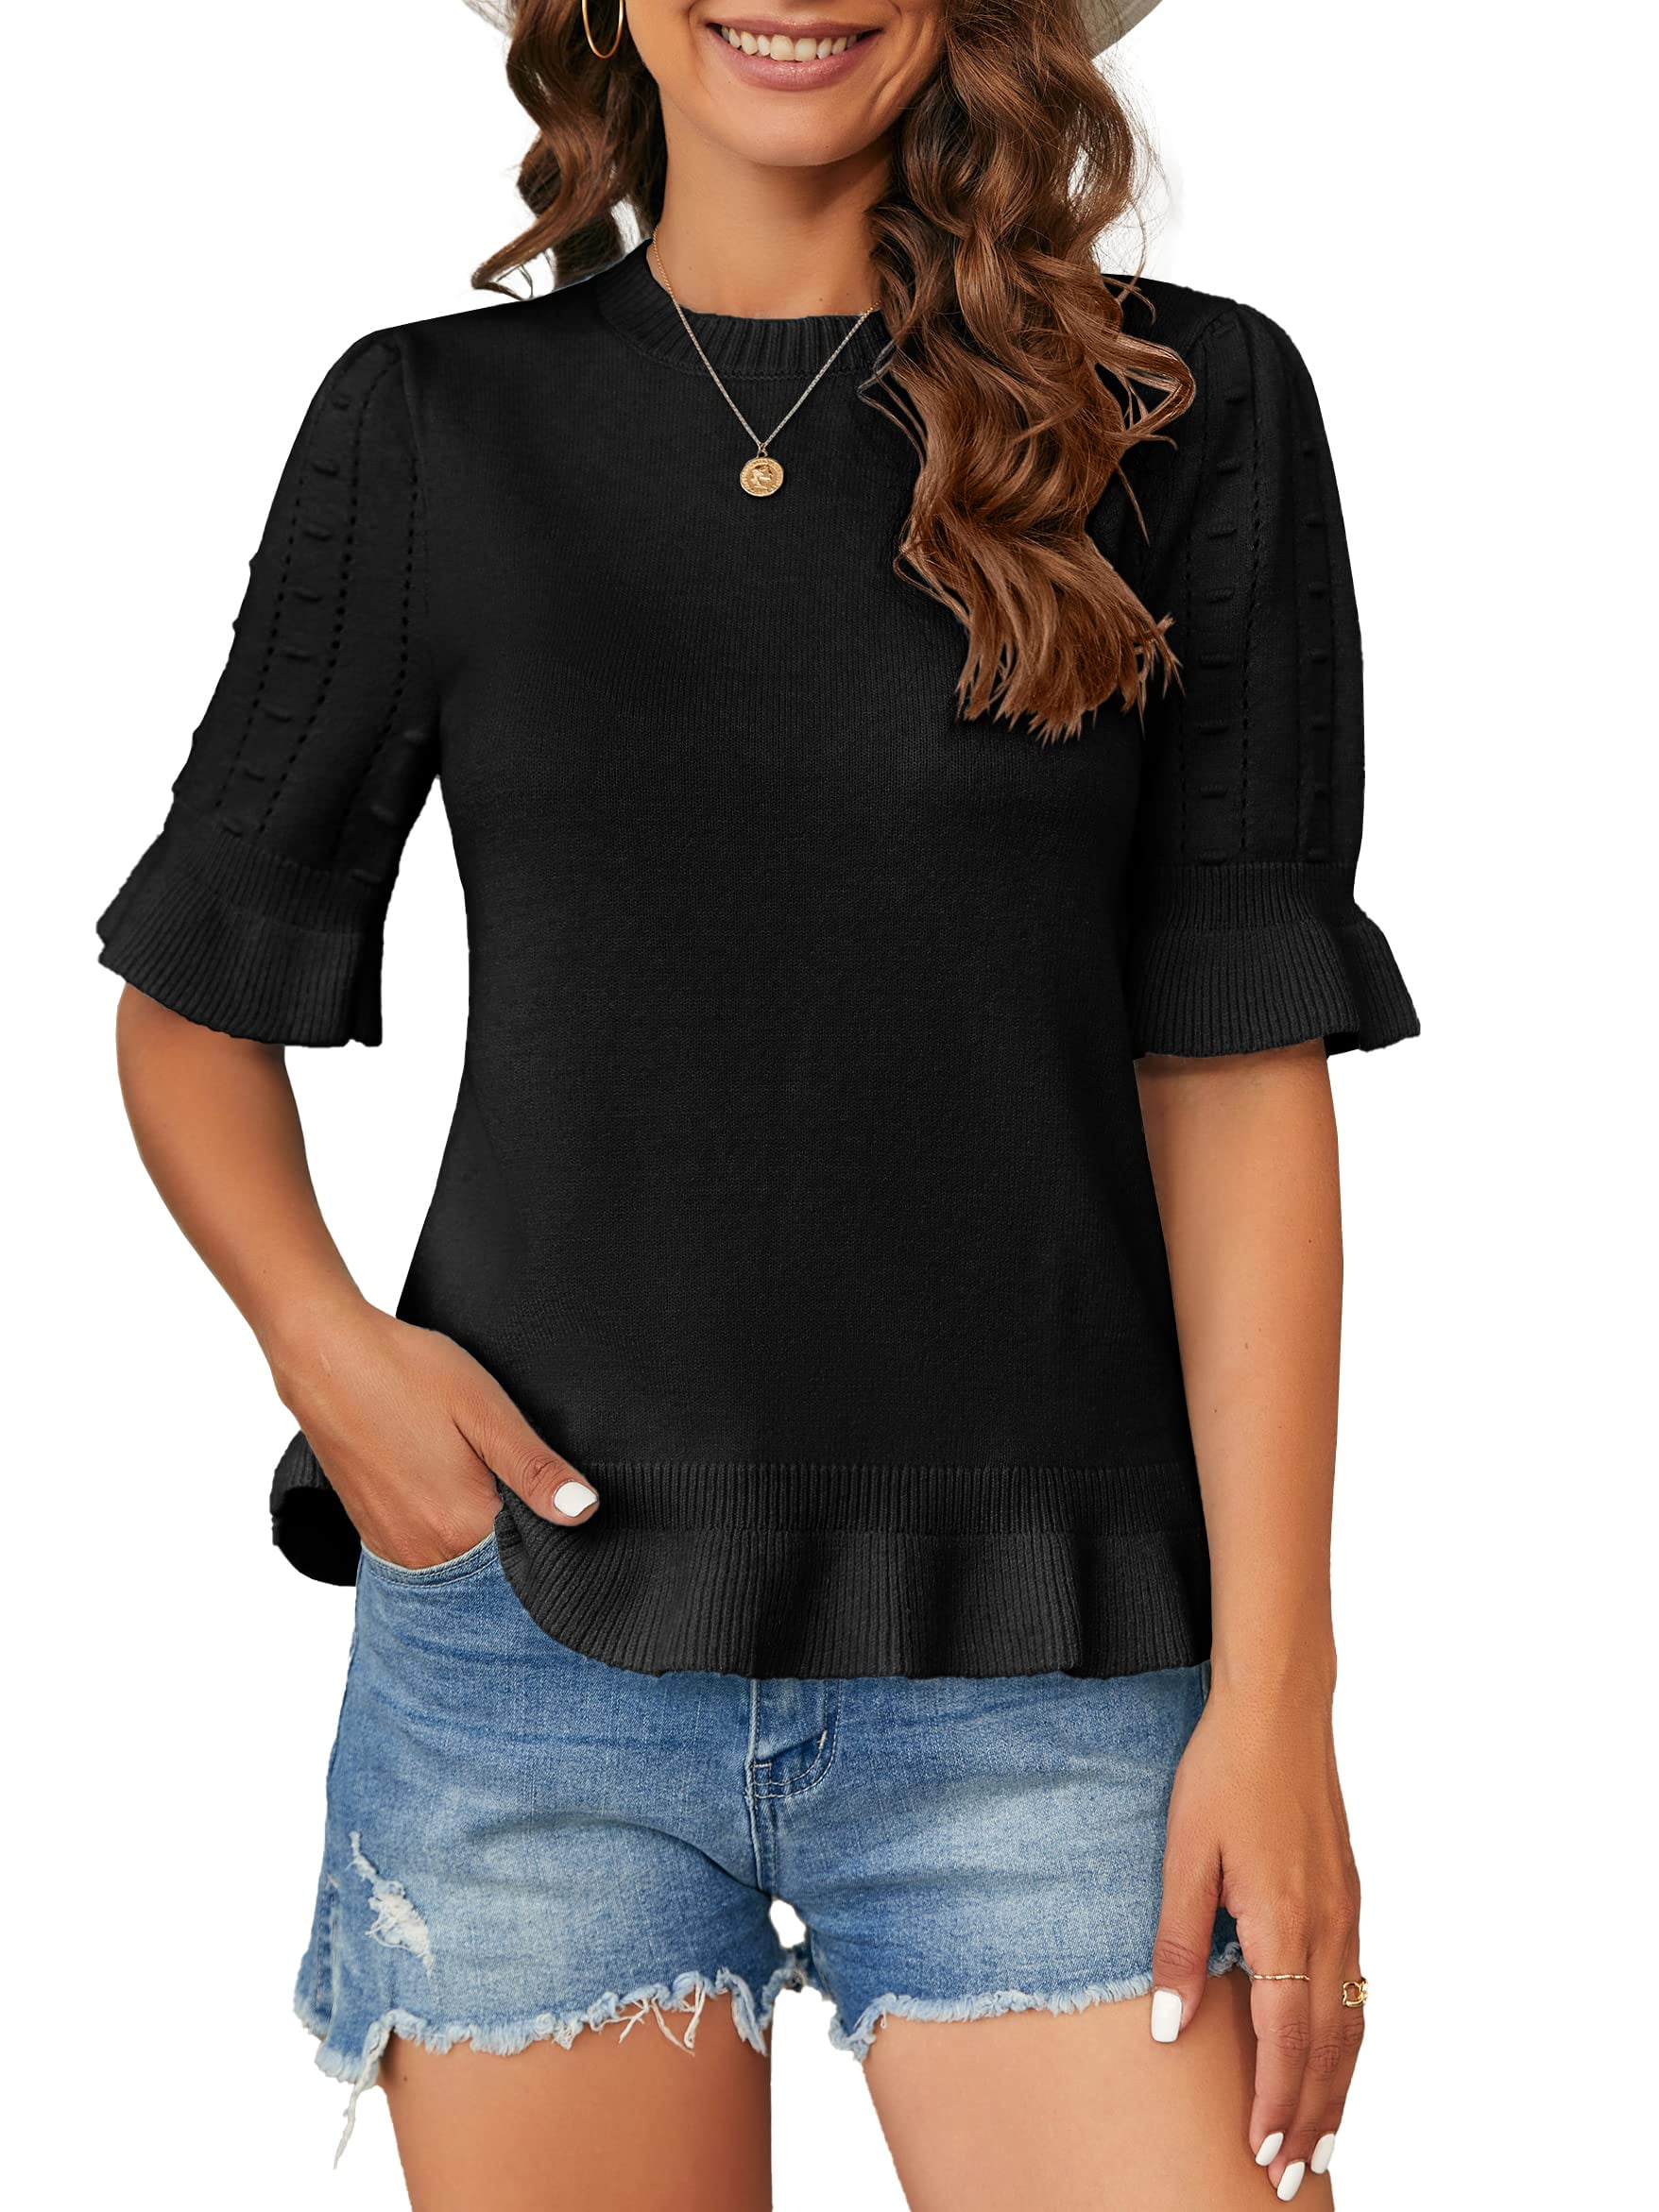 Sherrylily Womens Ruffle Short Sleeve Pullover Sweaters Shirt